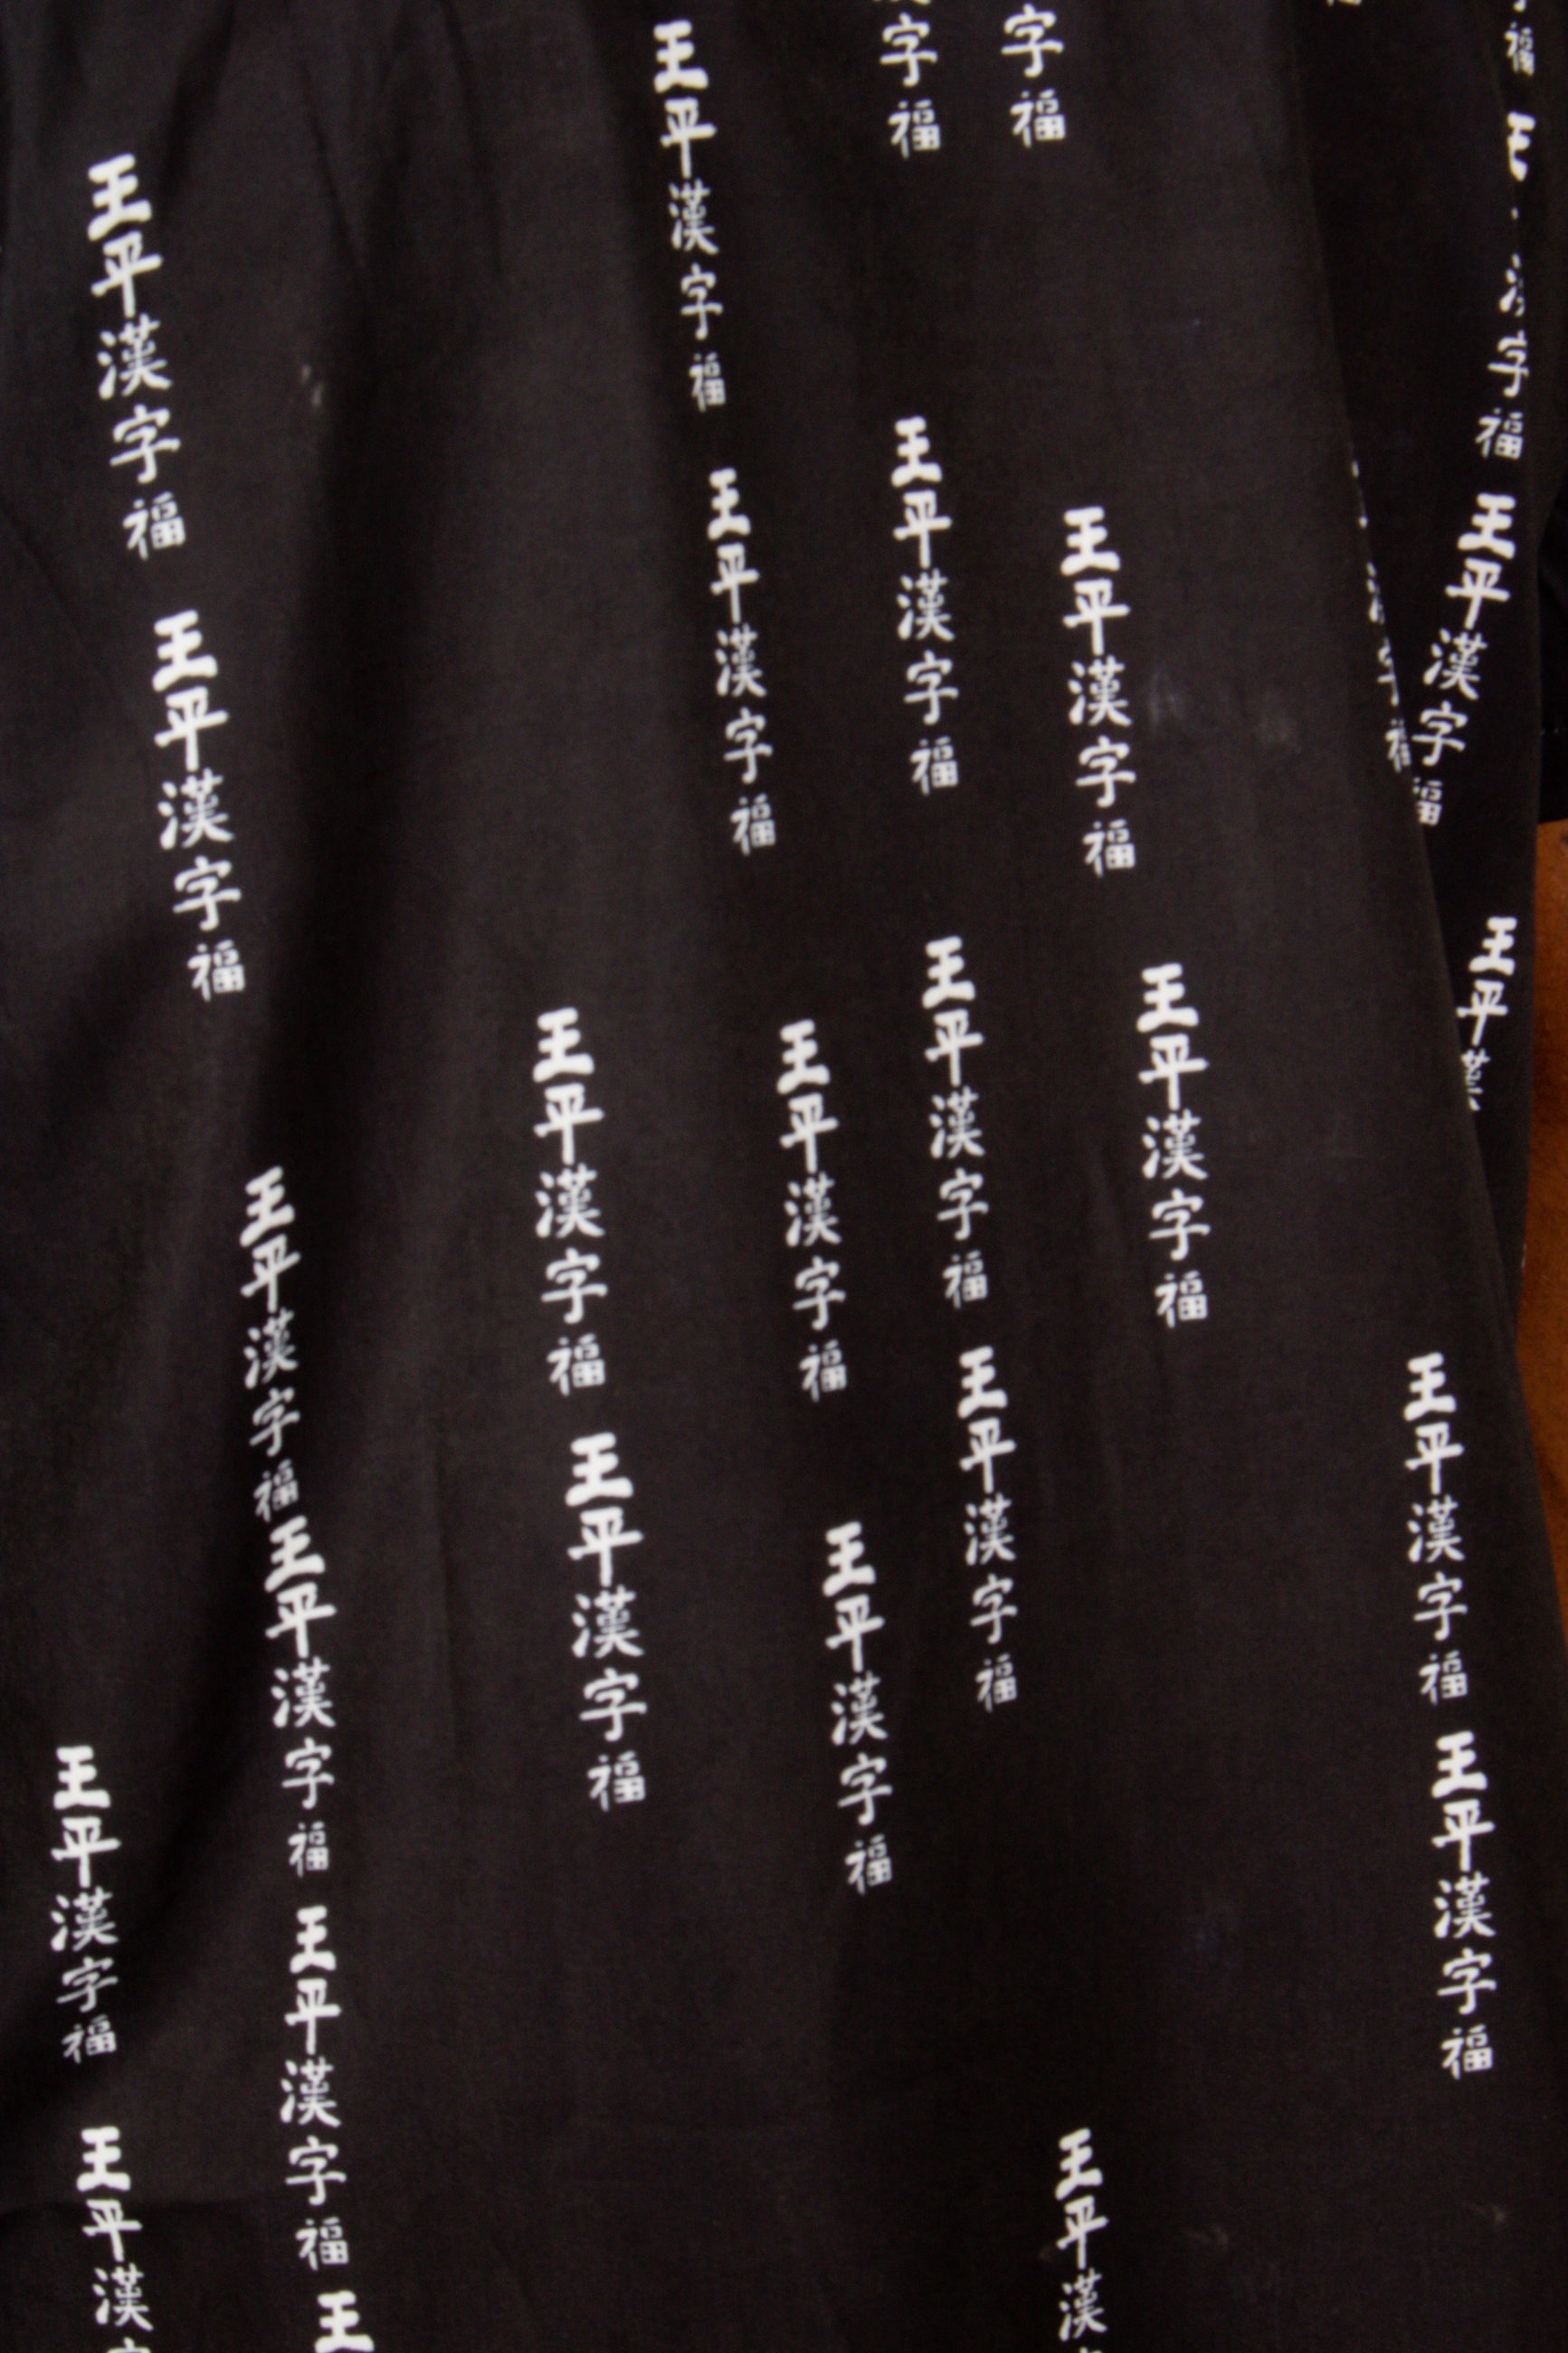 All-Over Japanese Text Short Sleeve Black Shirt